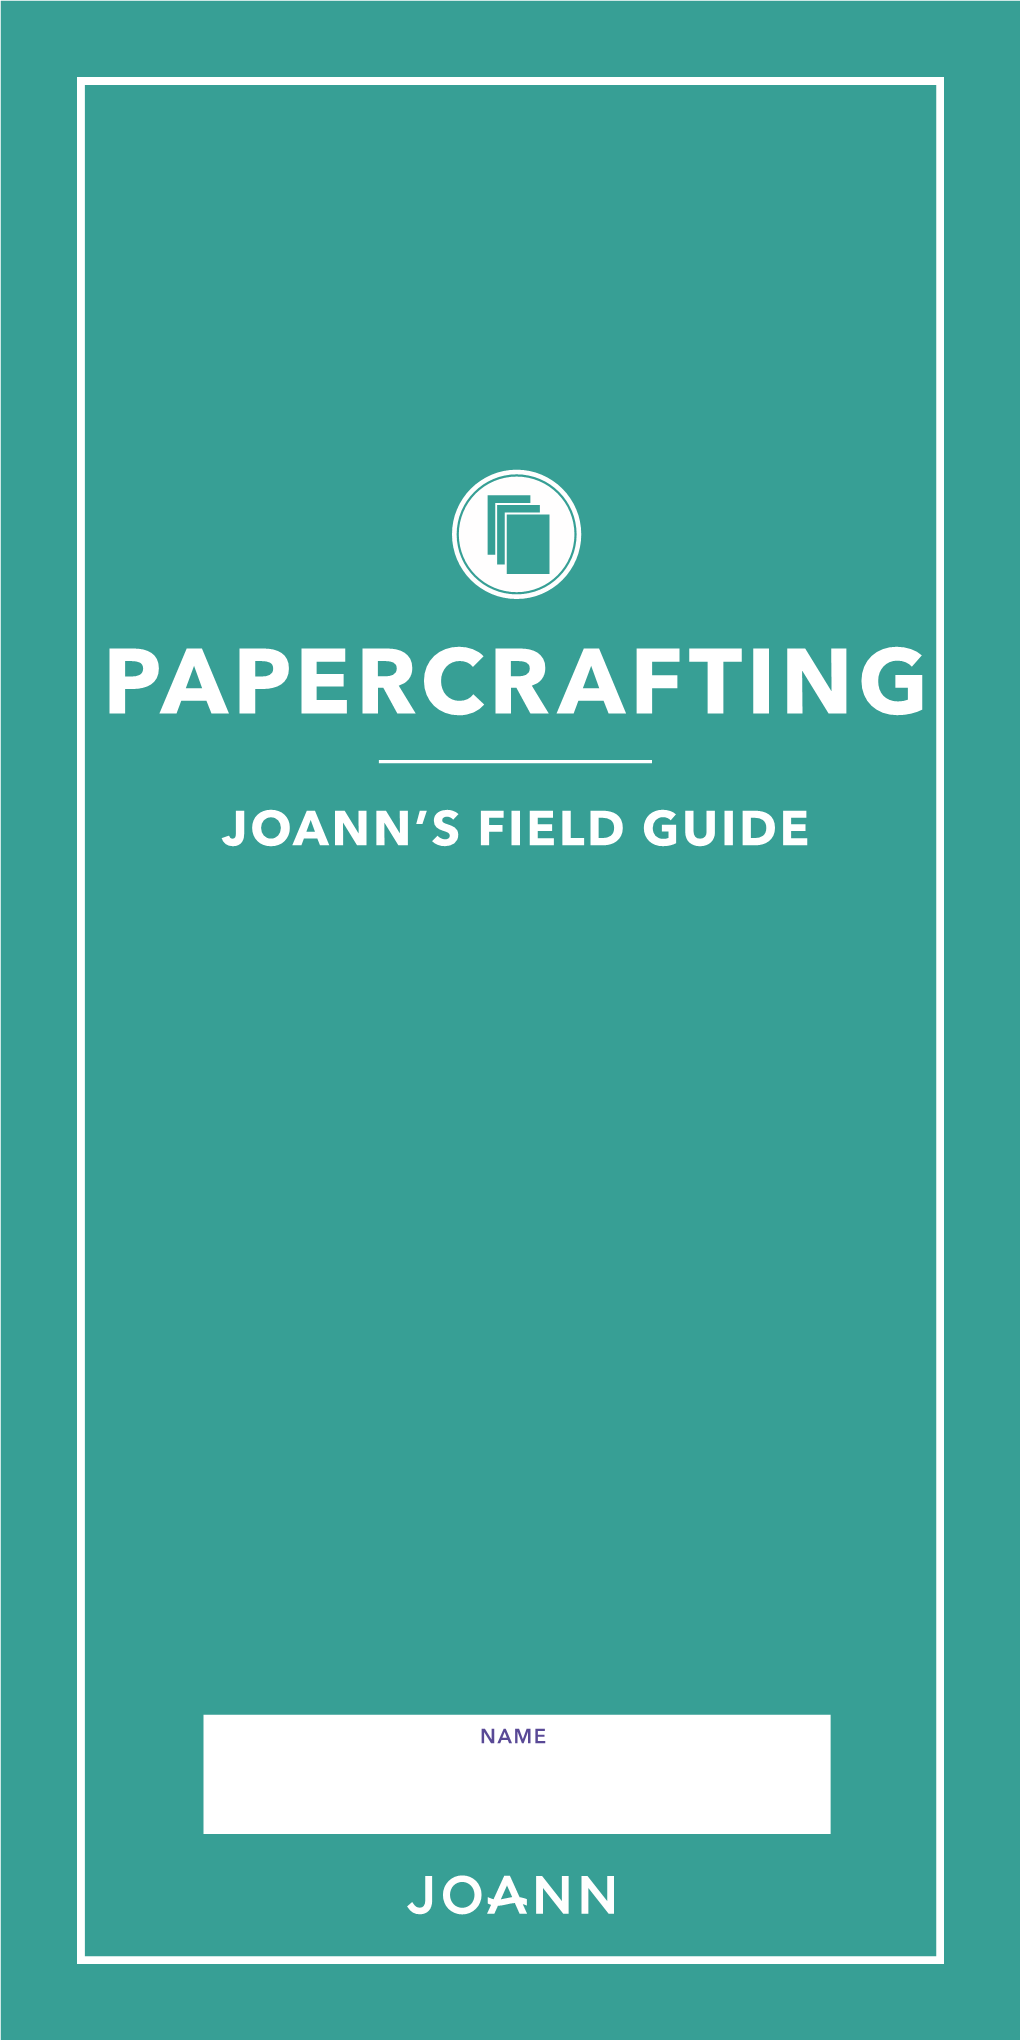 Papercrafting